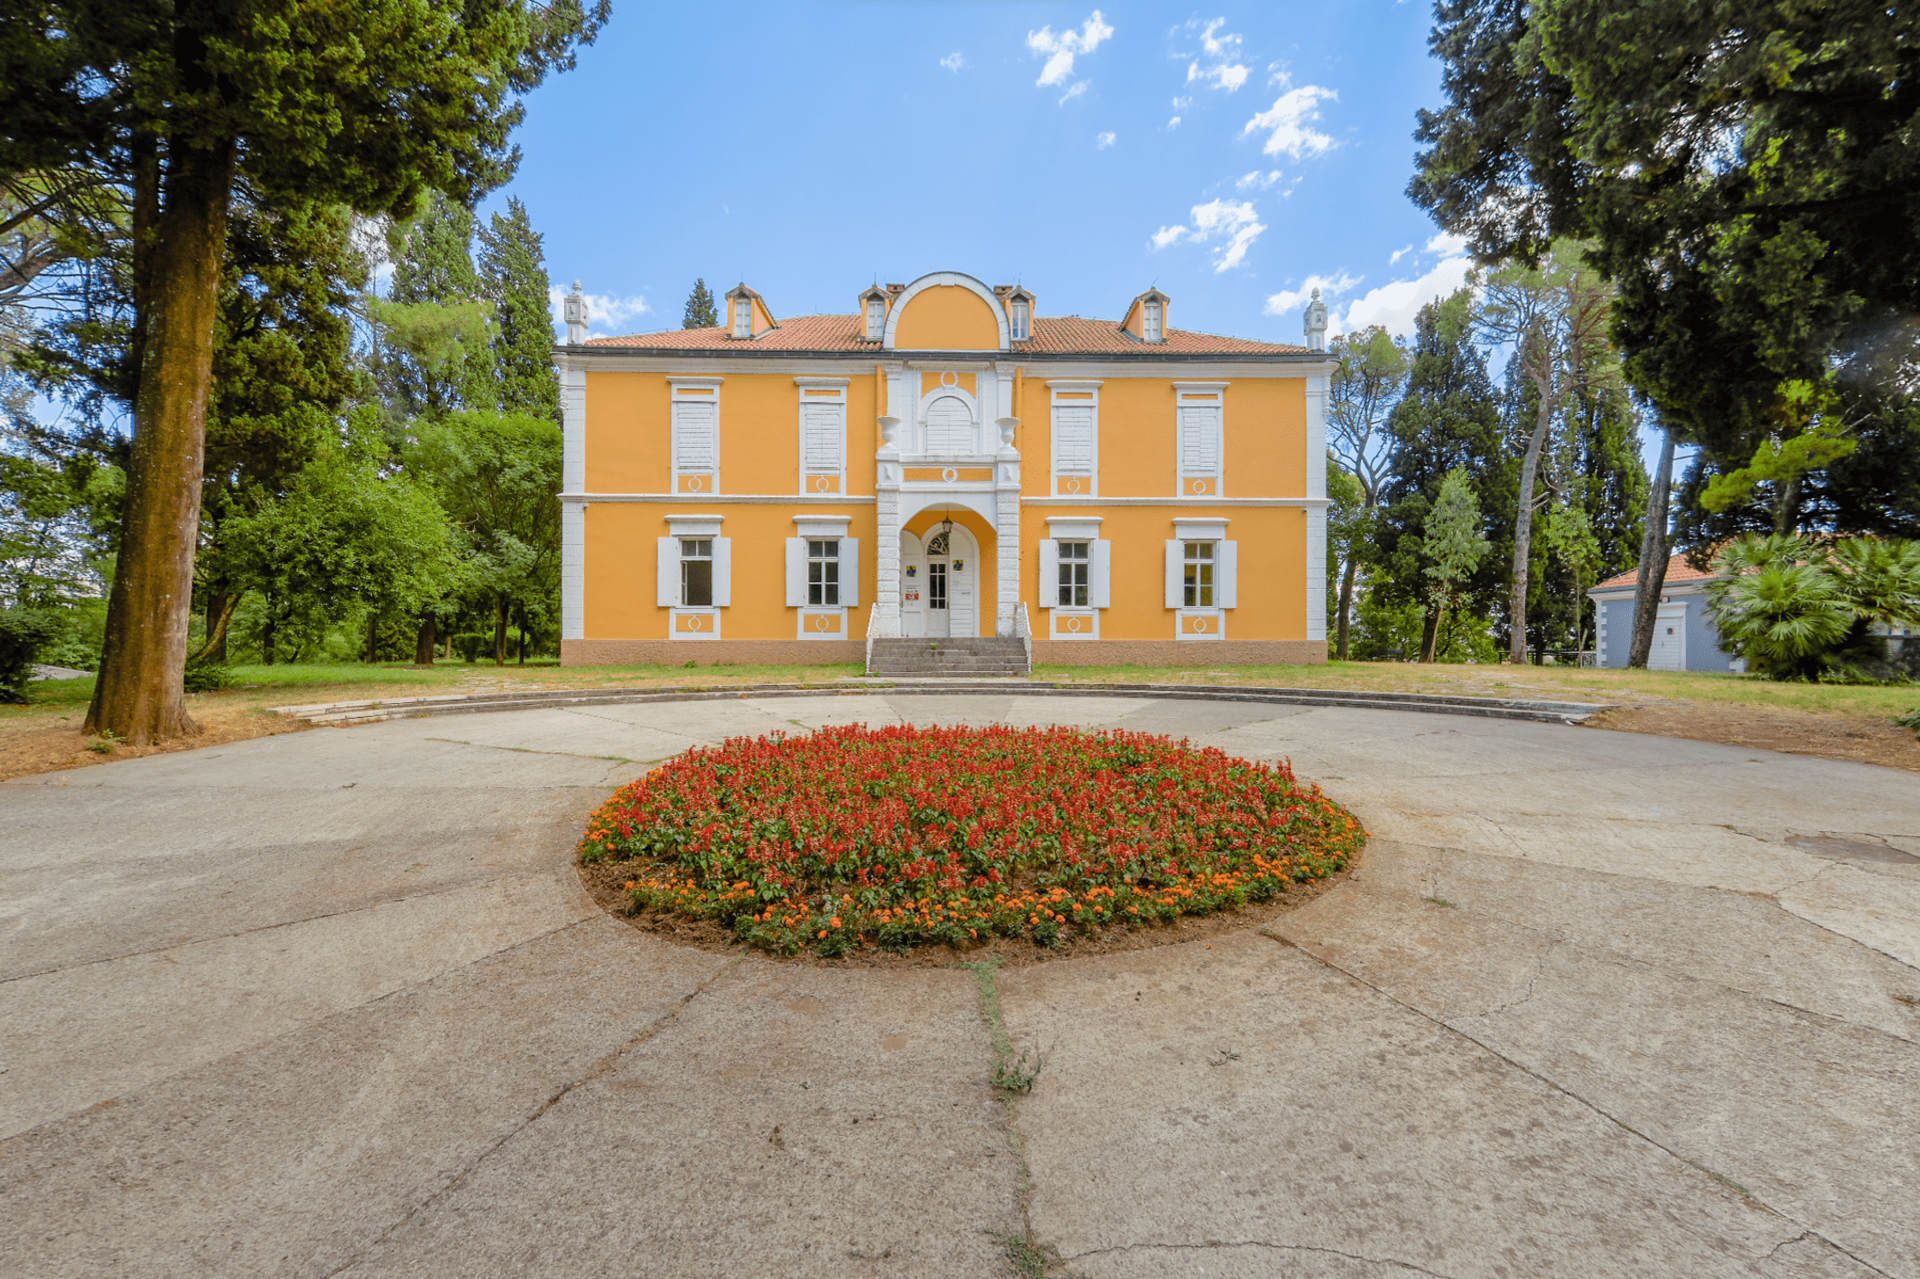 Palace complex Krusevac